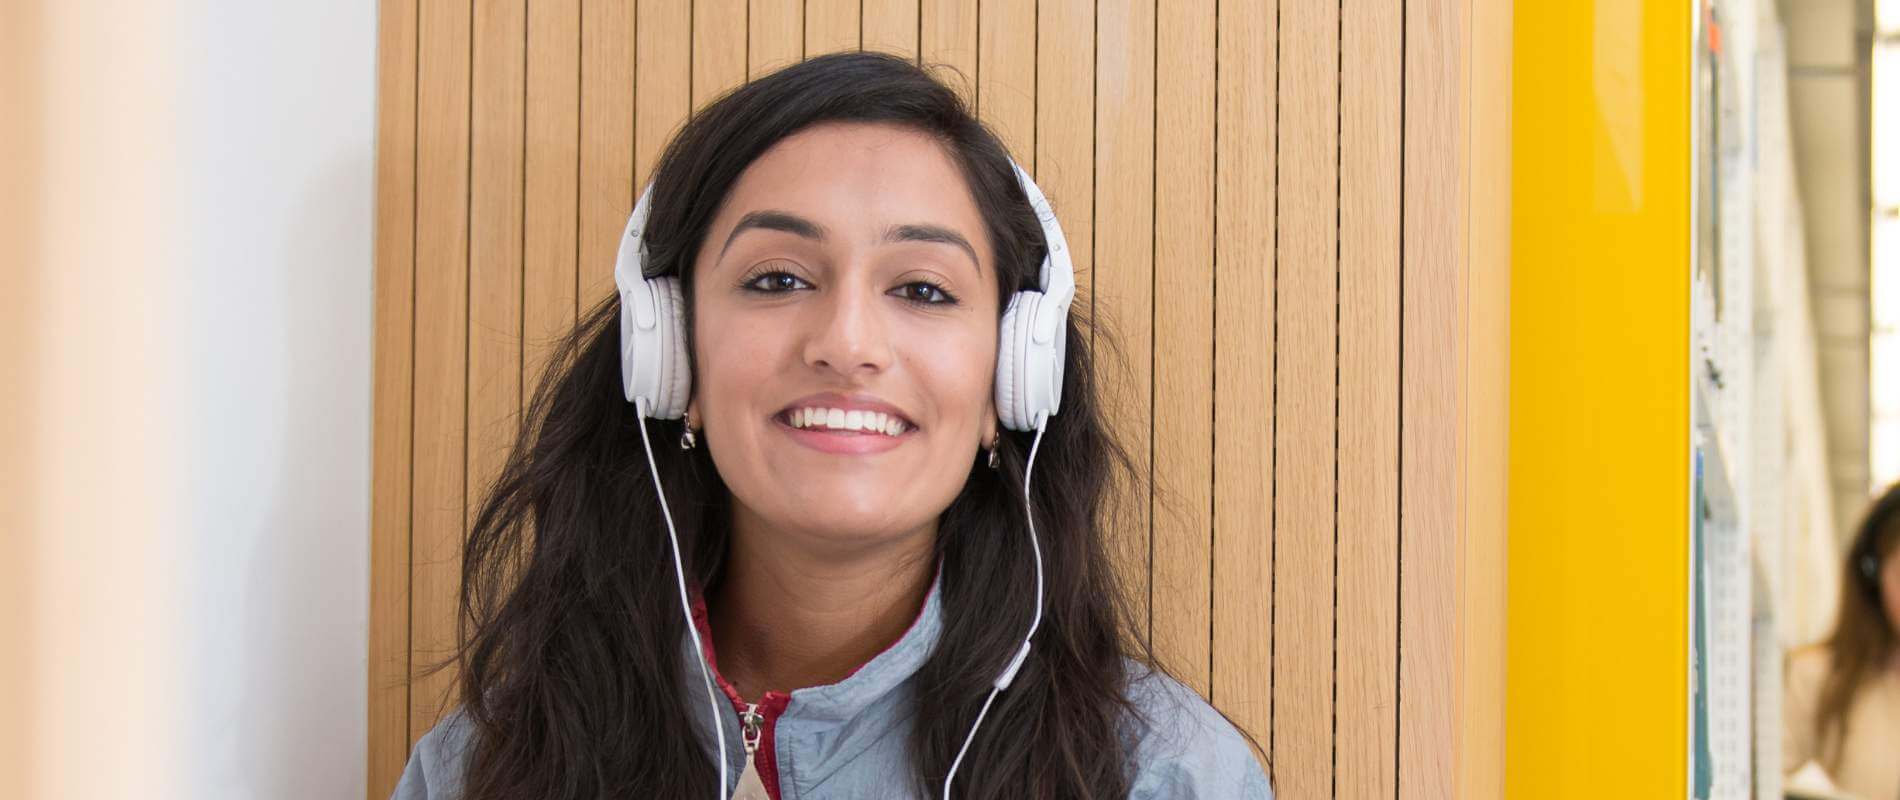 Female student wearing headphones